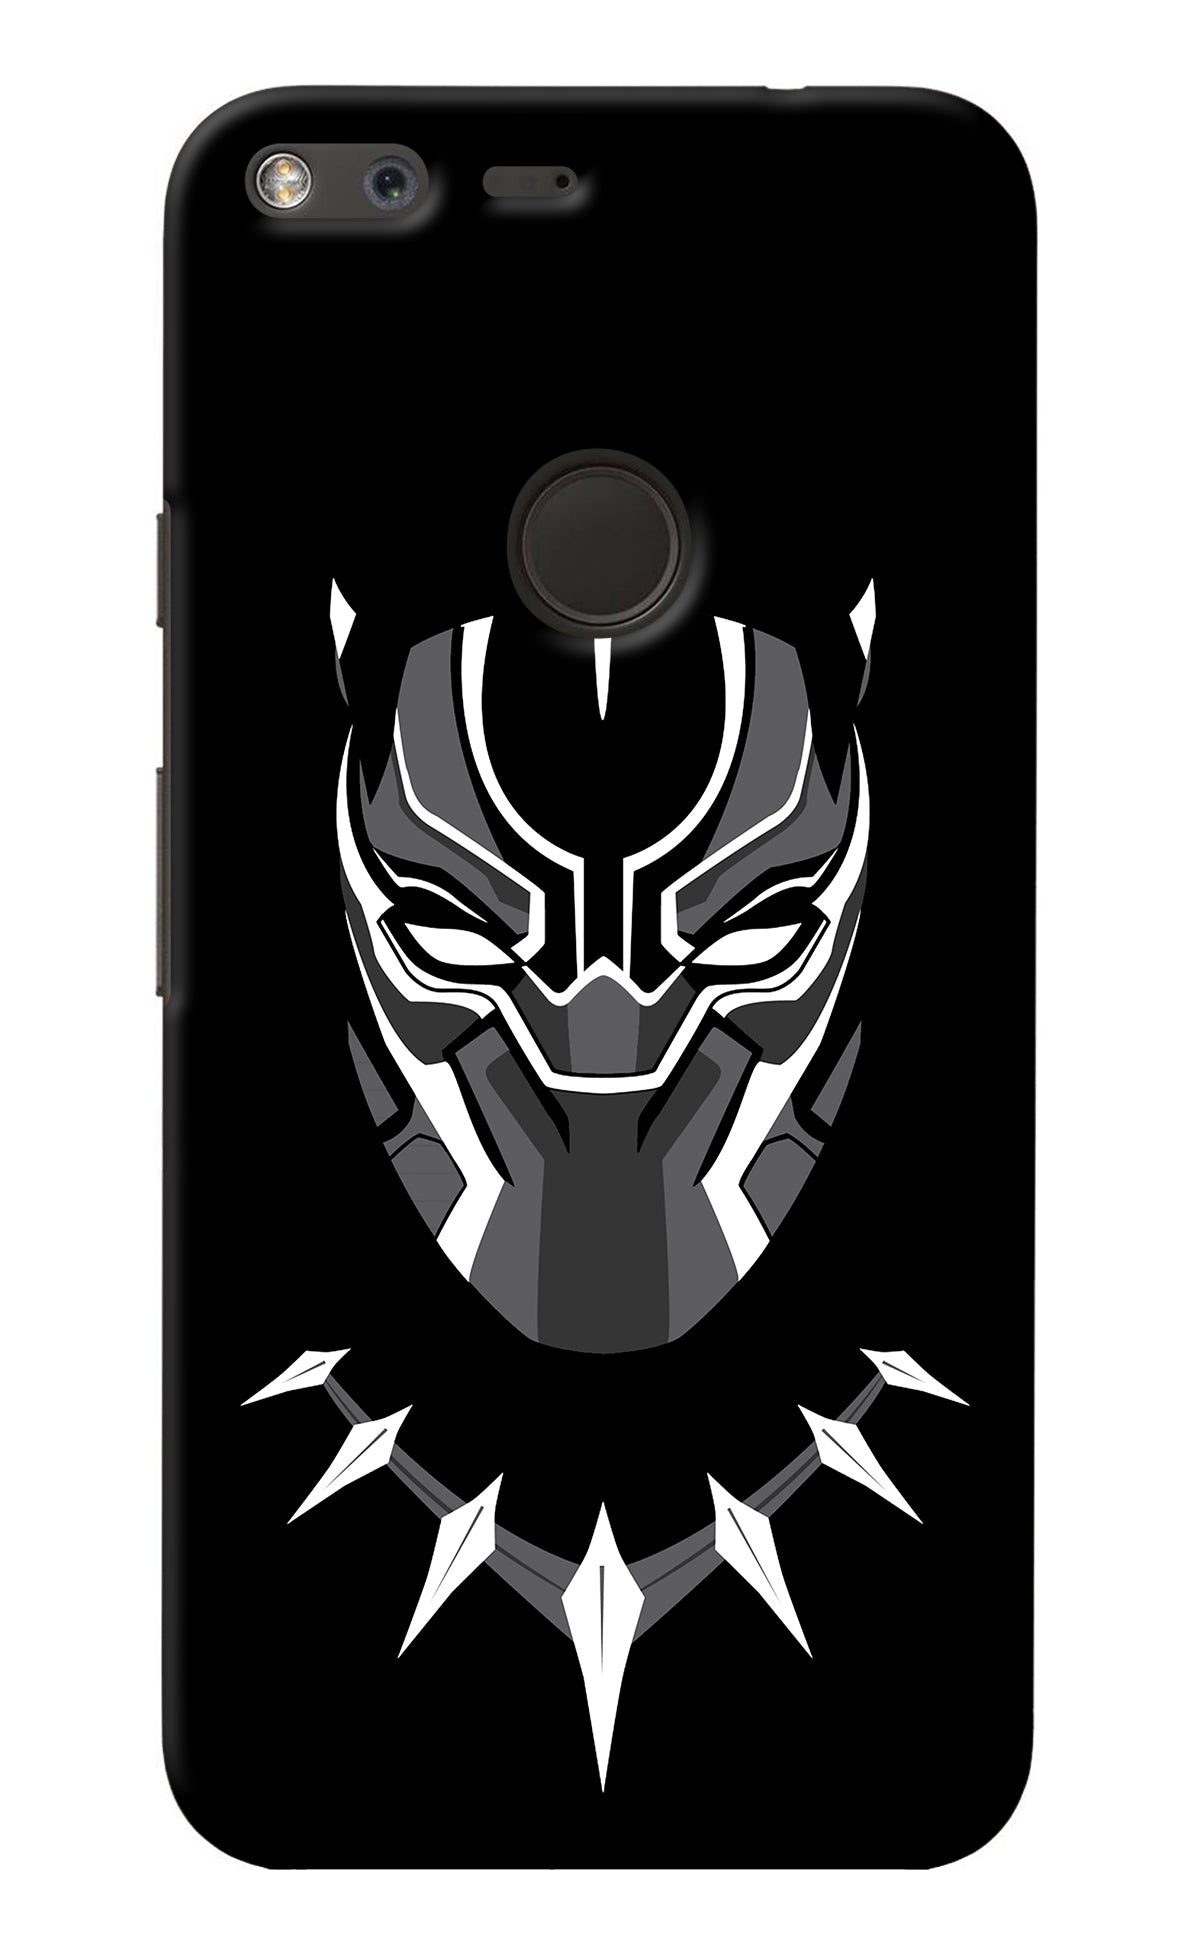 Black Panther Google Pixel XL Back Cover